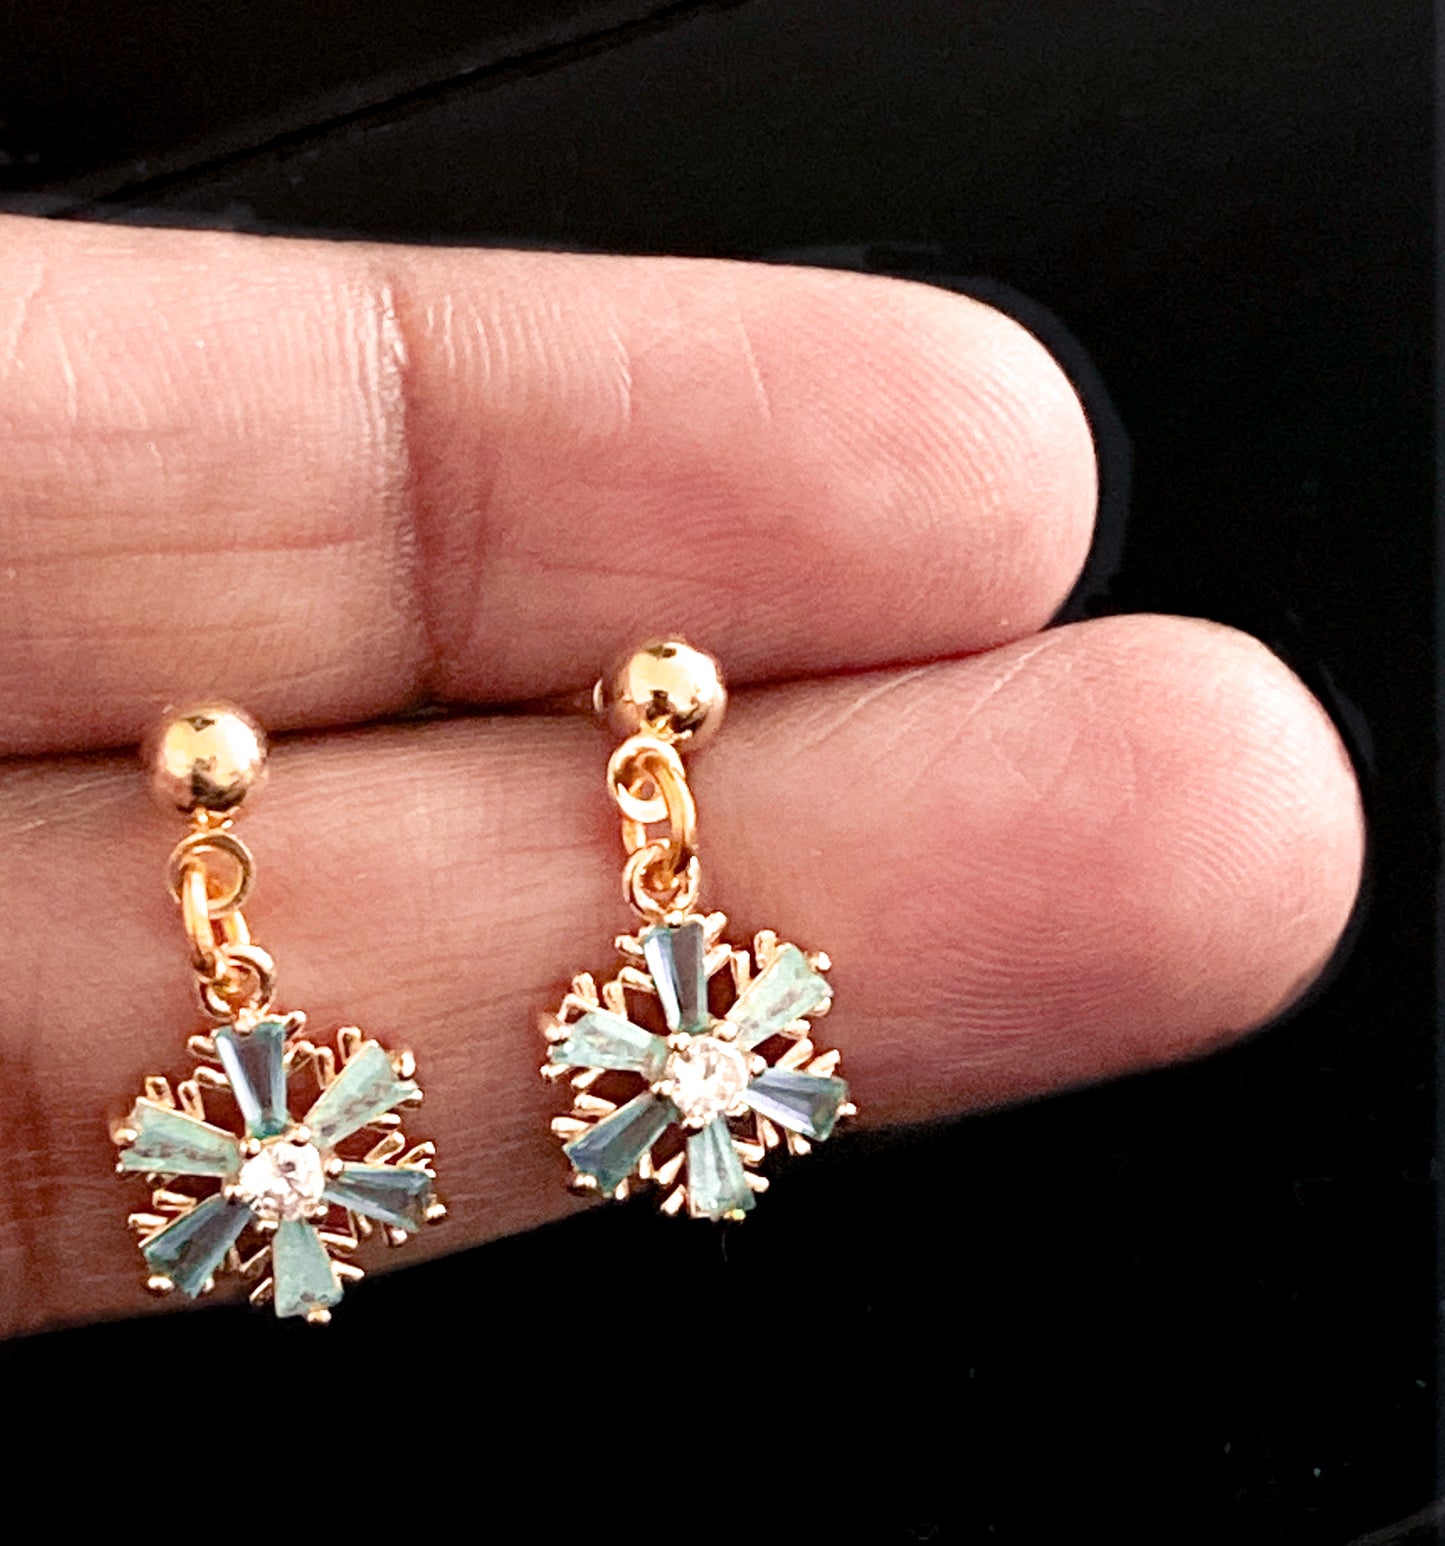 Sparkly snowflake earrings